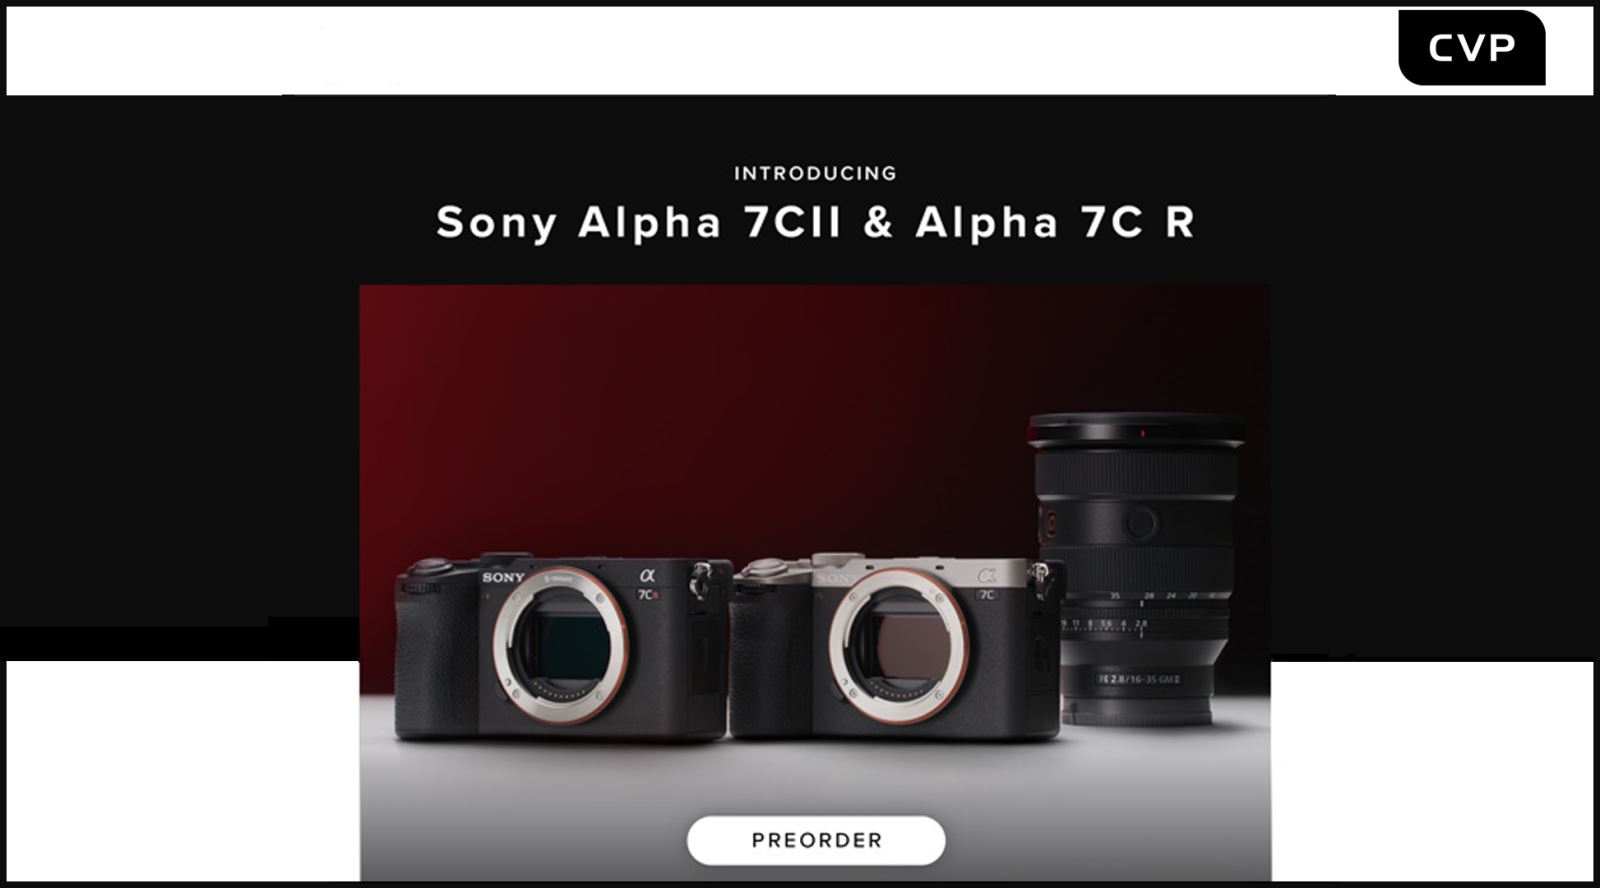 Sony Alpha 7CII & Alpha 7C R